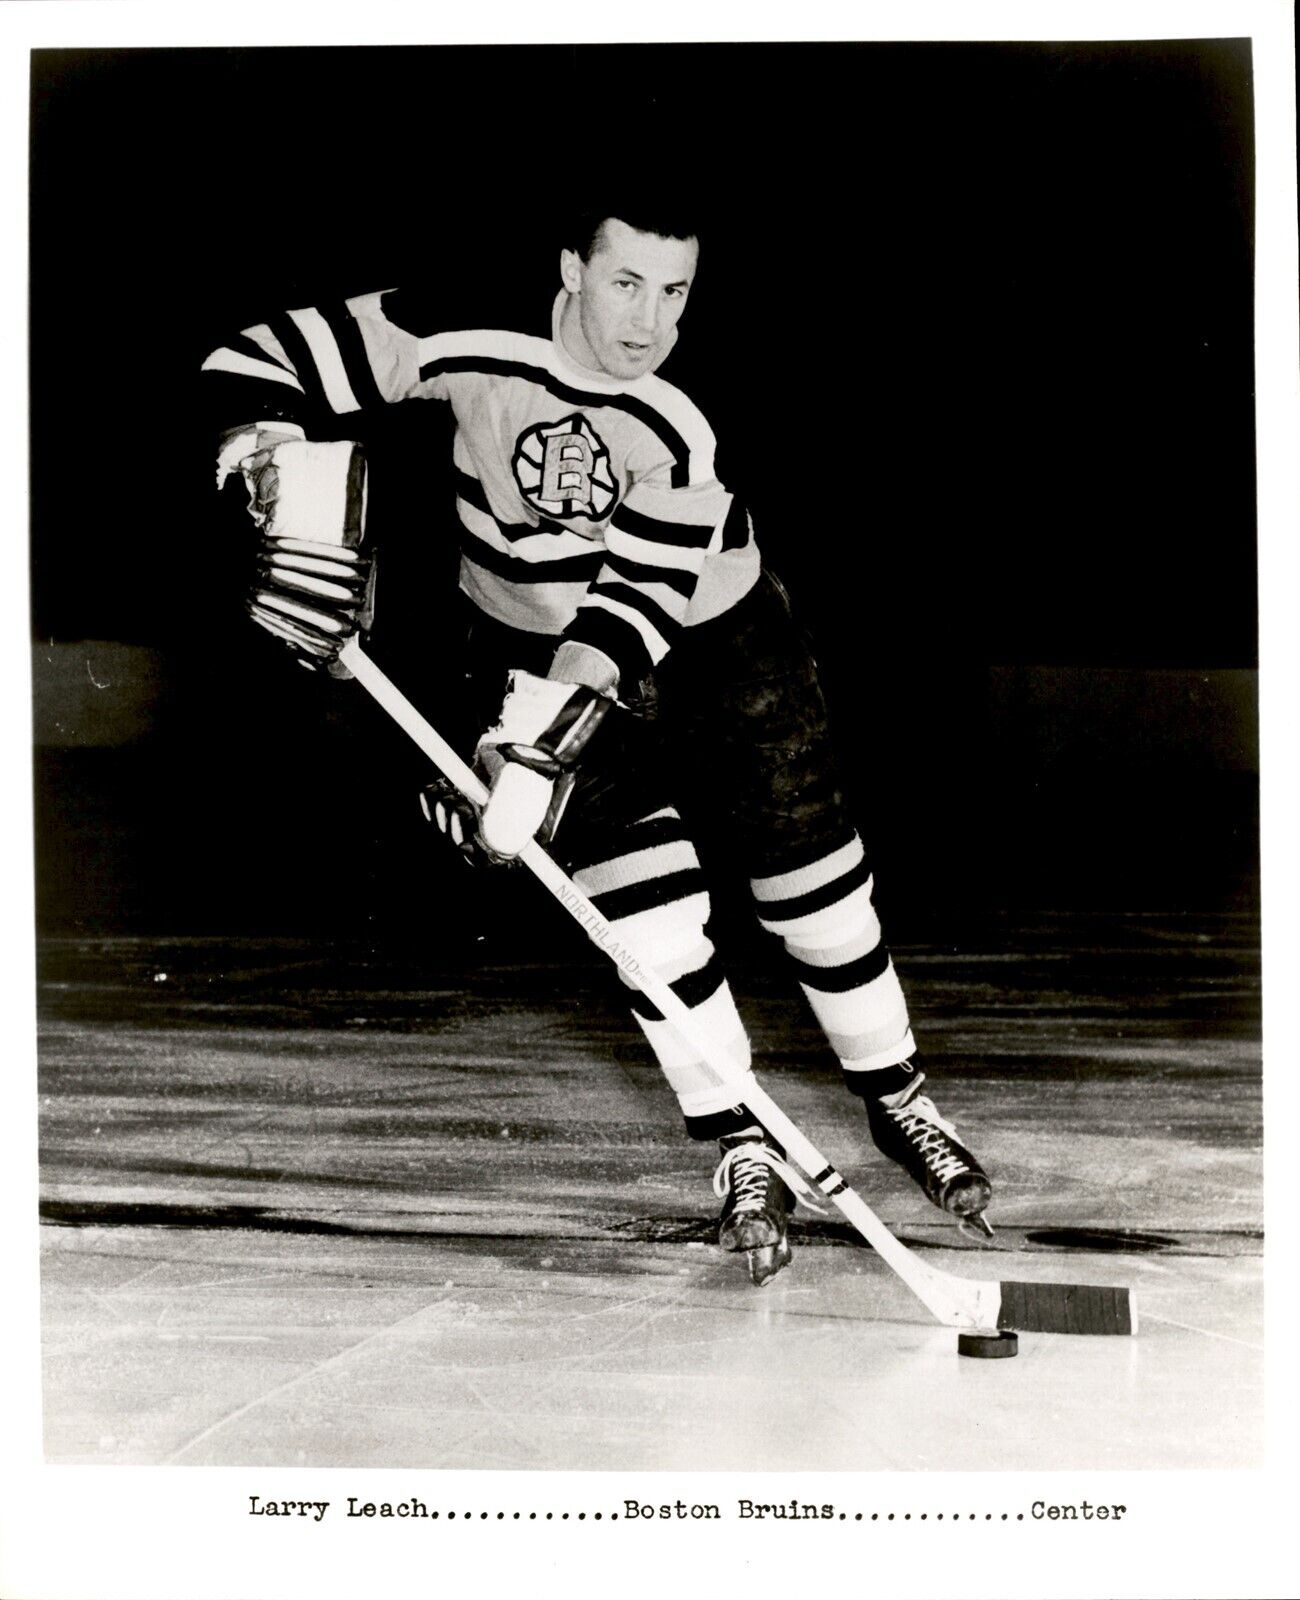 PF20 Original Photo LARRY LEACH 1958-62 BOSTON BRUINS CENTER CLASSIC NHL HOCKEY